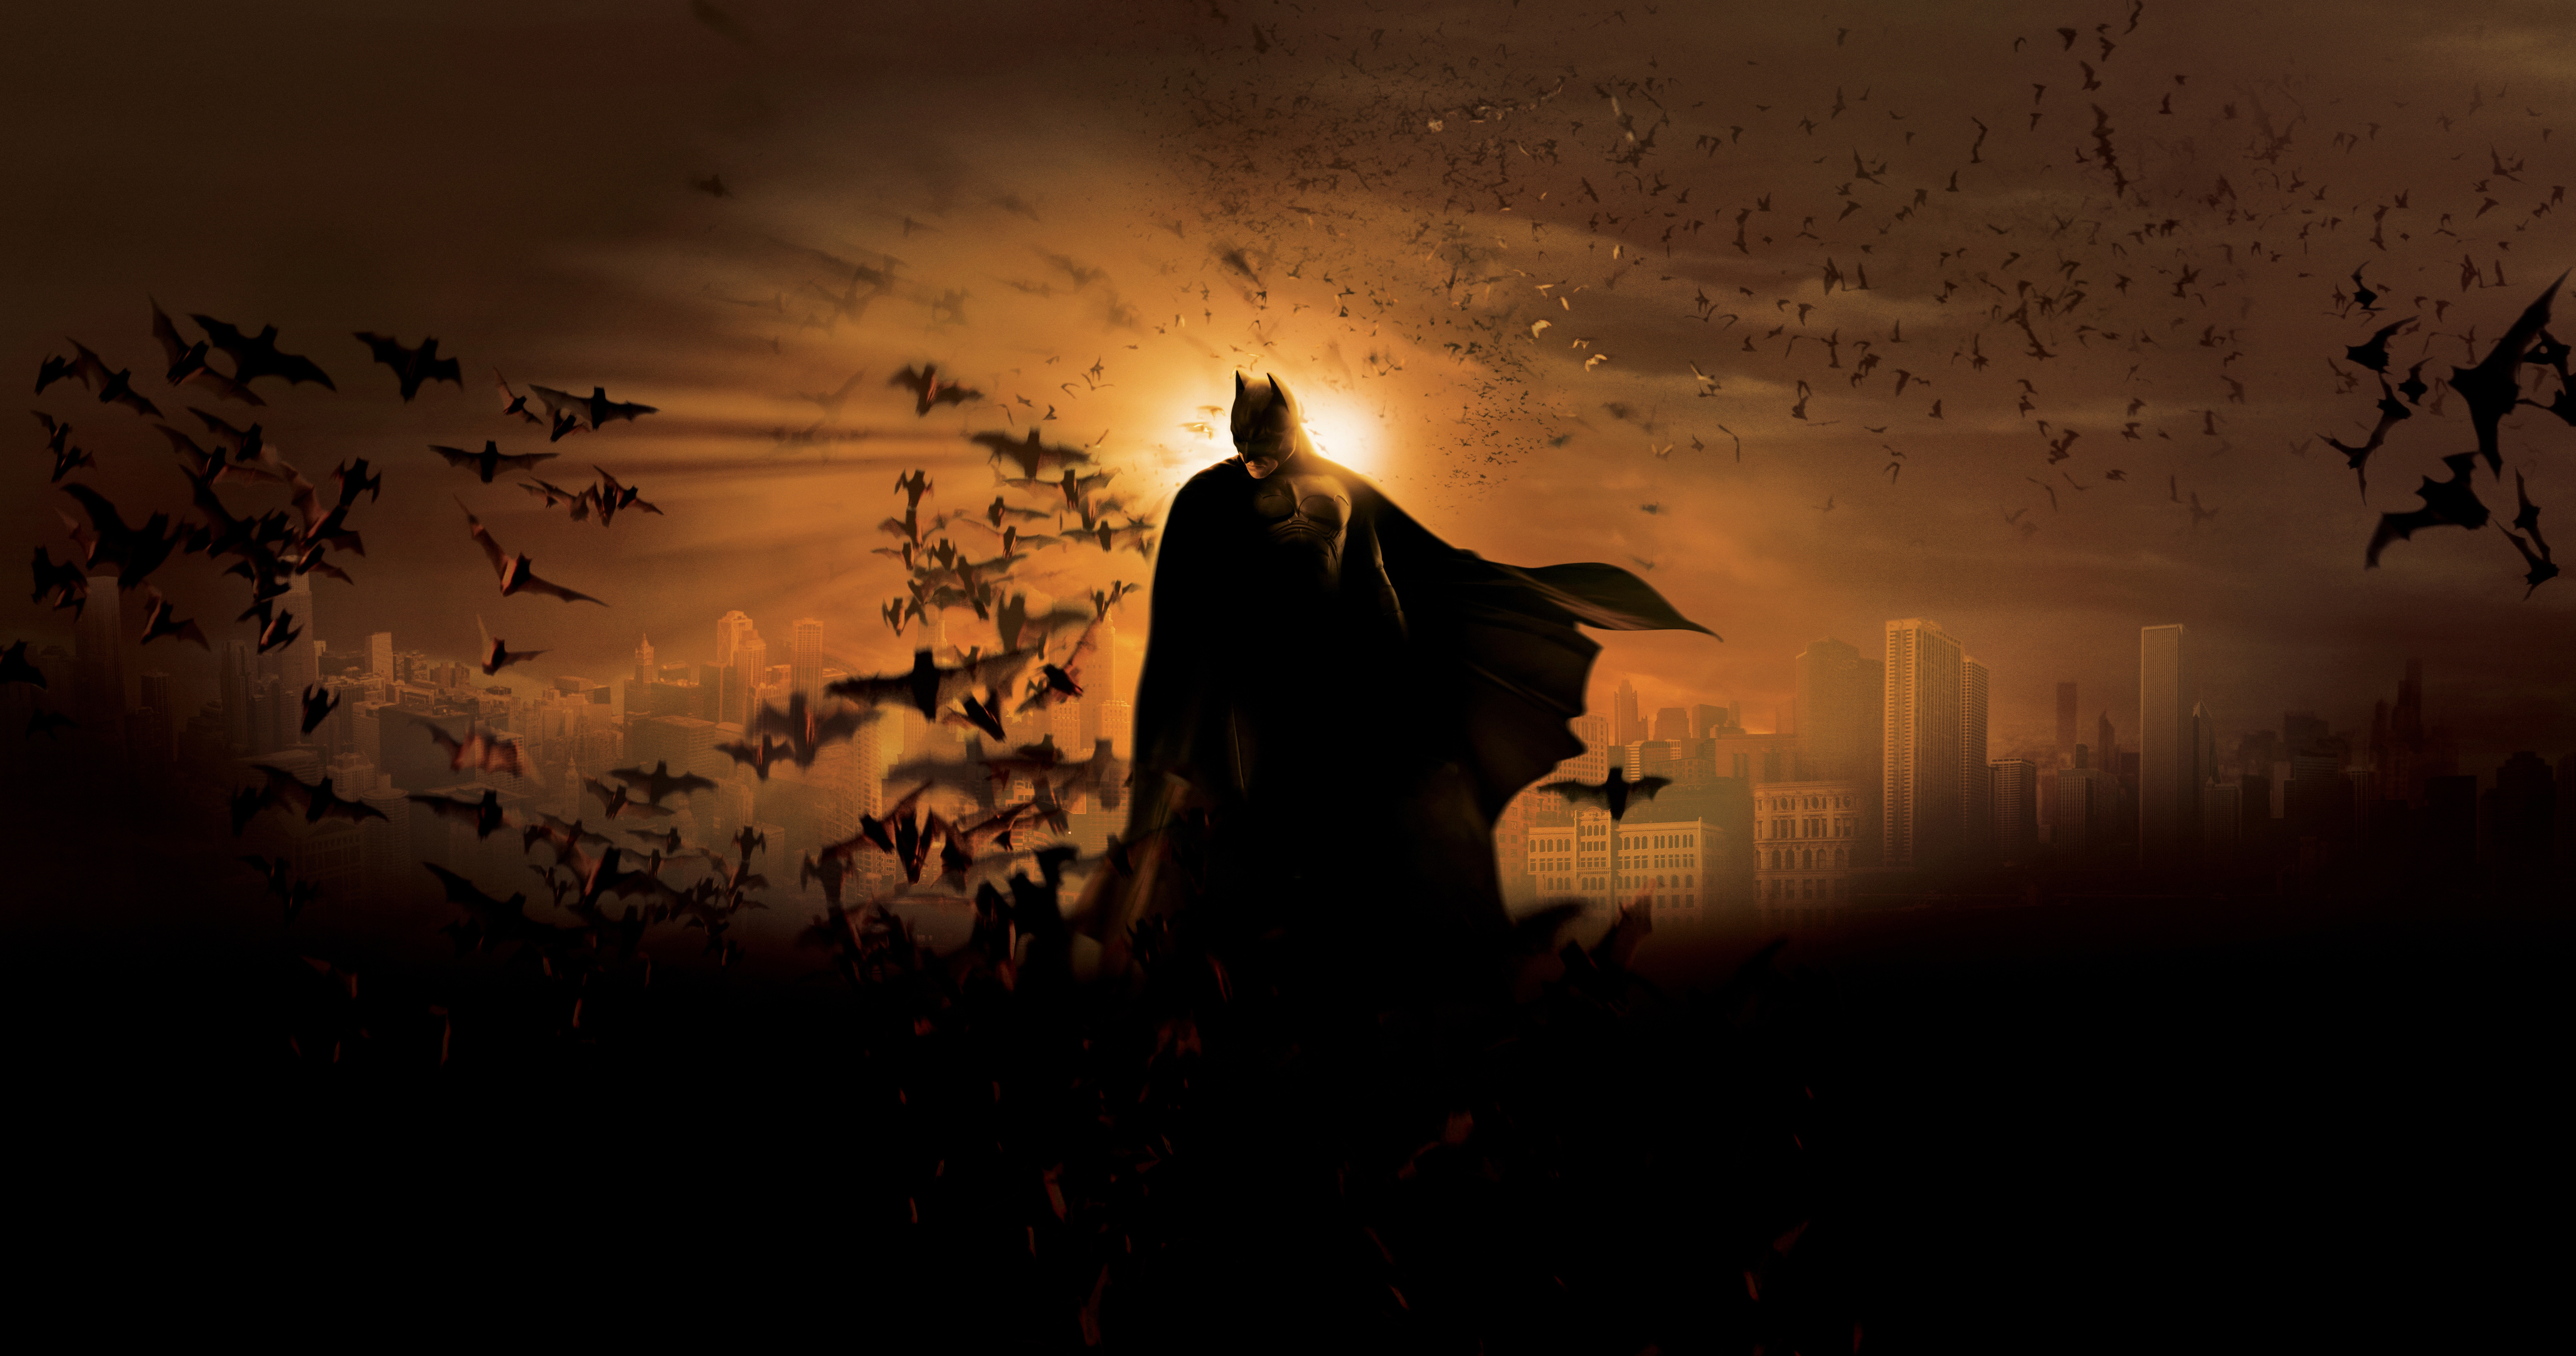 bruce wayne, batman begins, superhero, bat, dc comics, batman, night, movie, gotham city